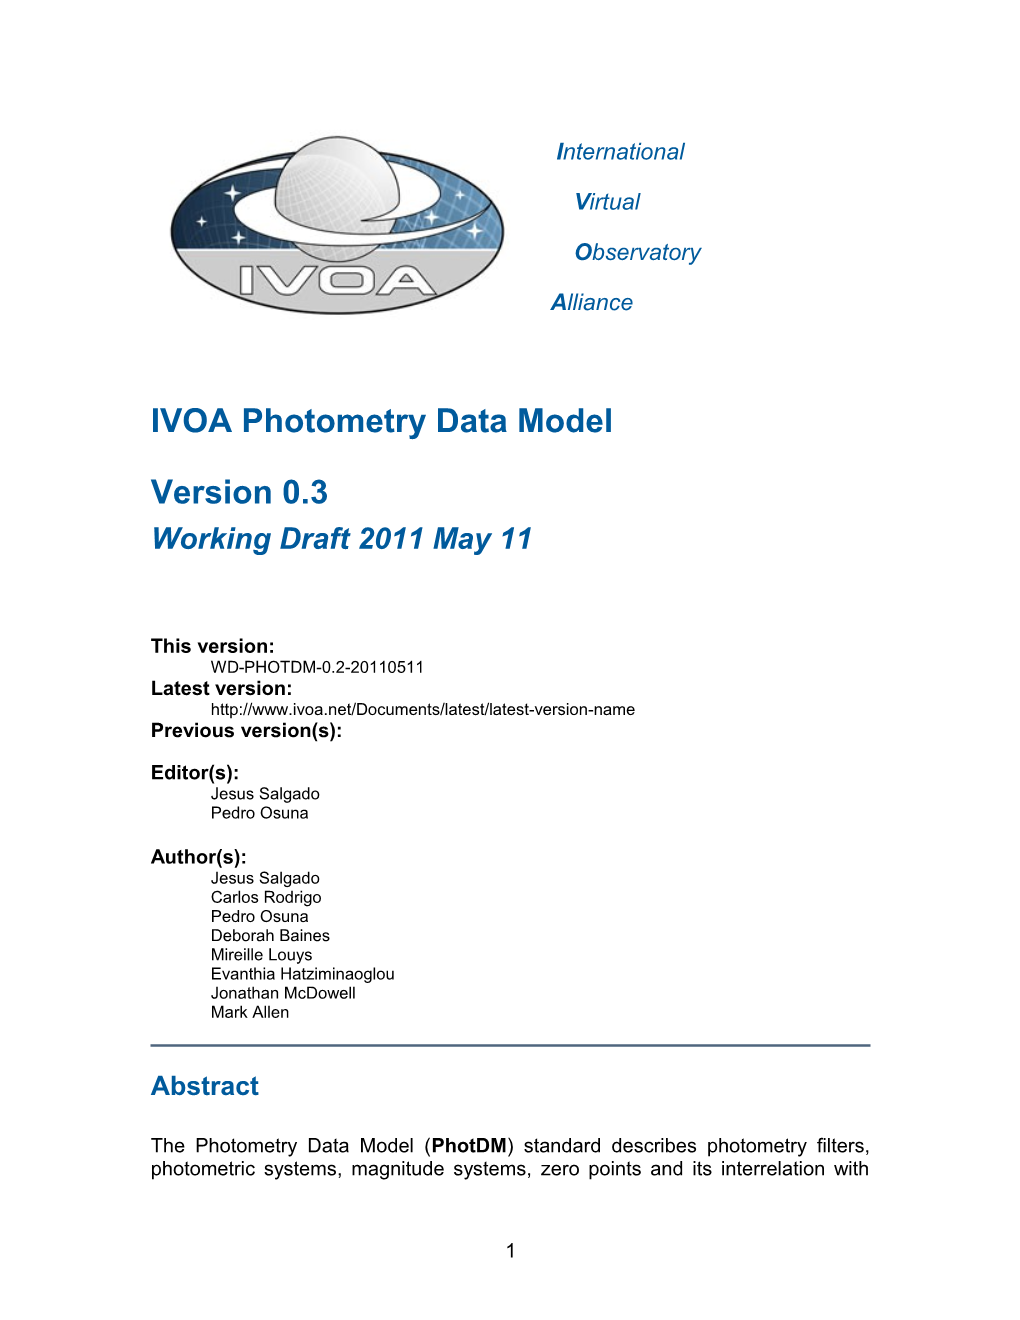 IVOA Photometry Data Model